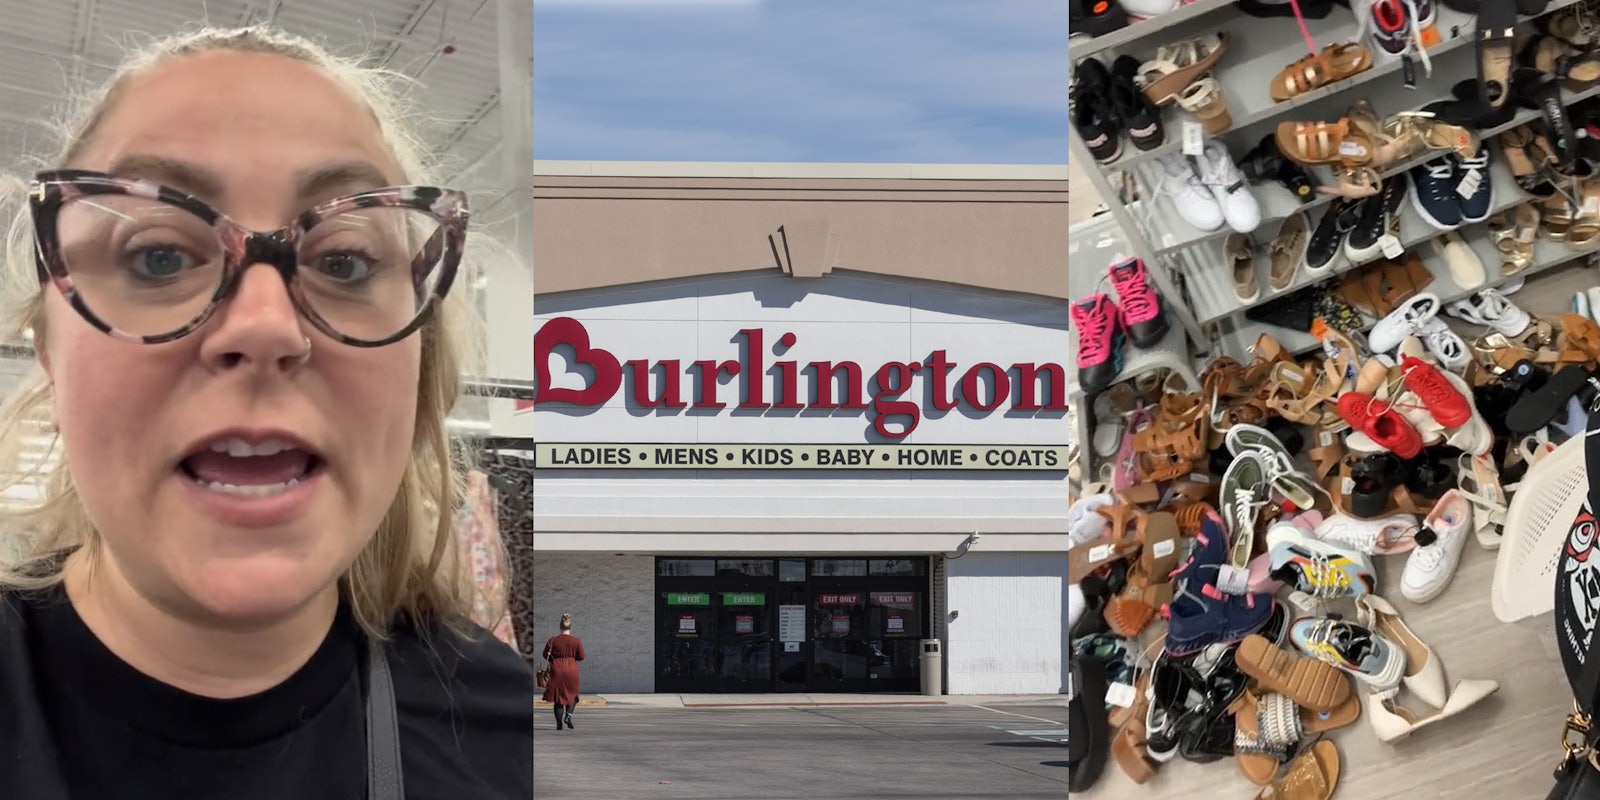 Burlington customer speaking (l) Burlington building with sign (c) Burlington shoe section in disarray (r)